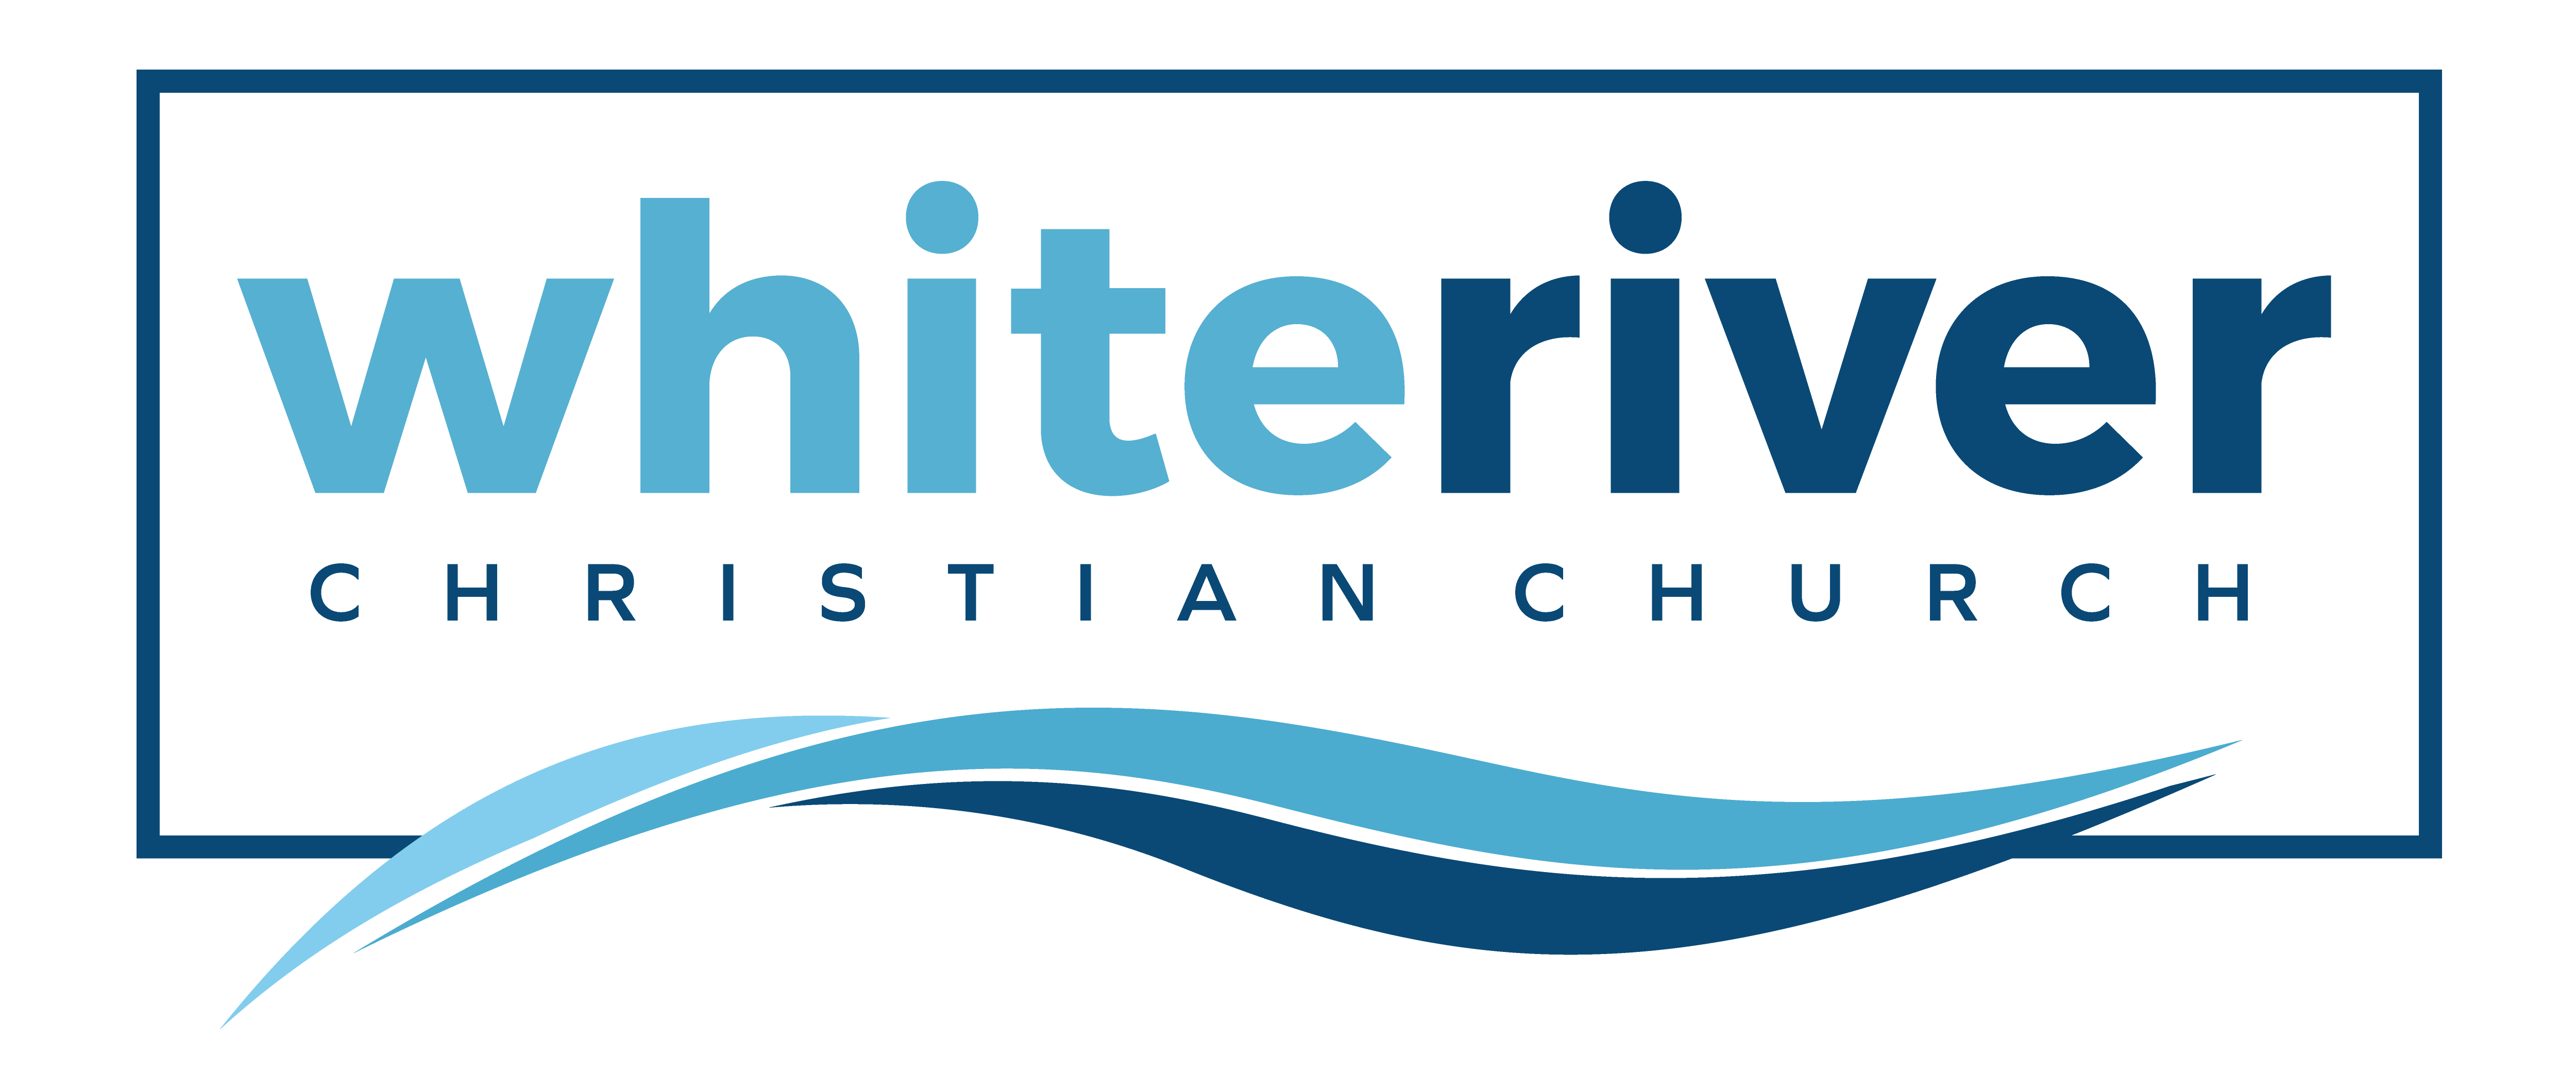 White Christian Logo - White River Christian Church